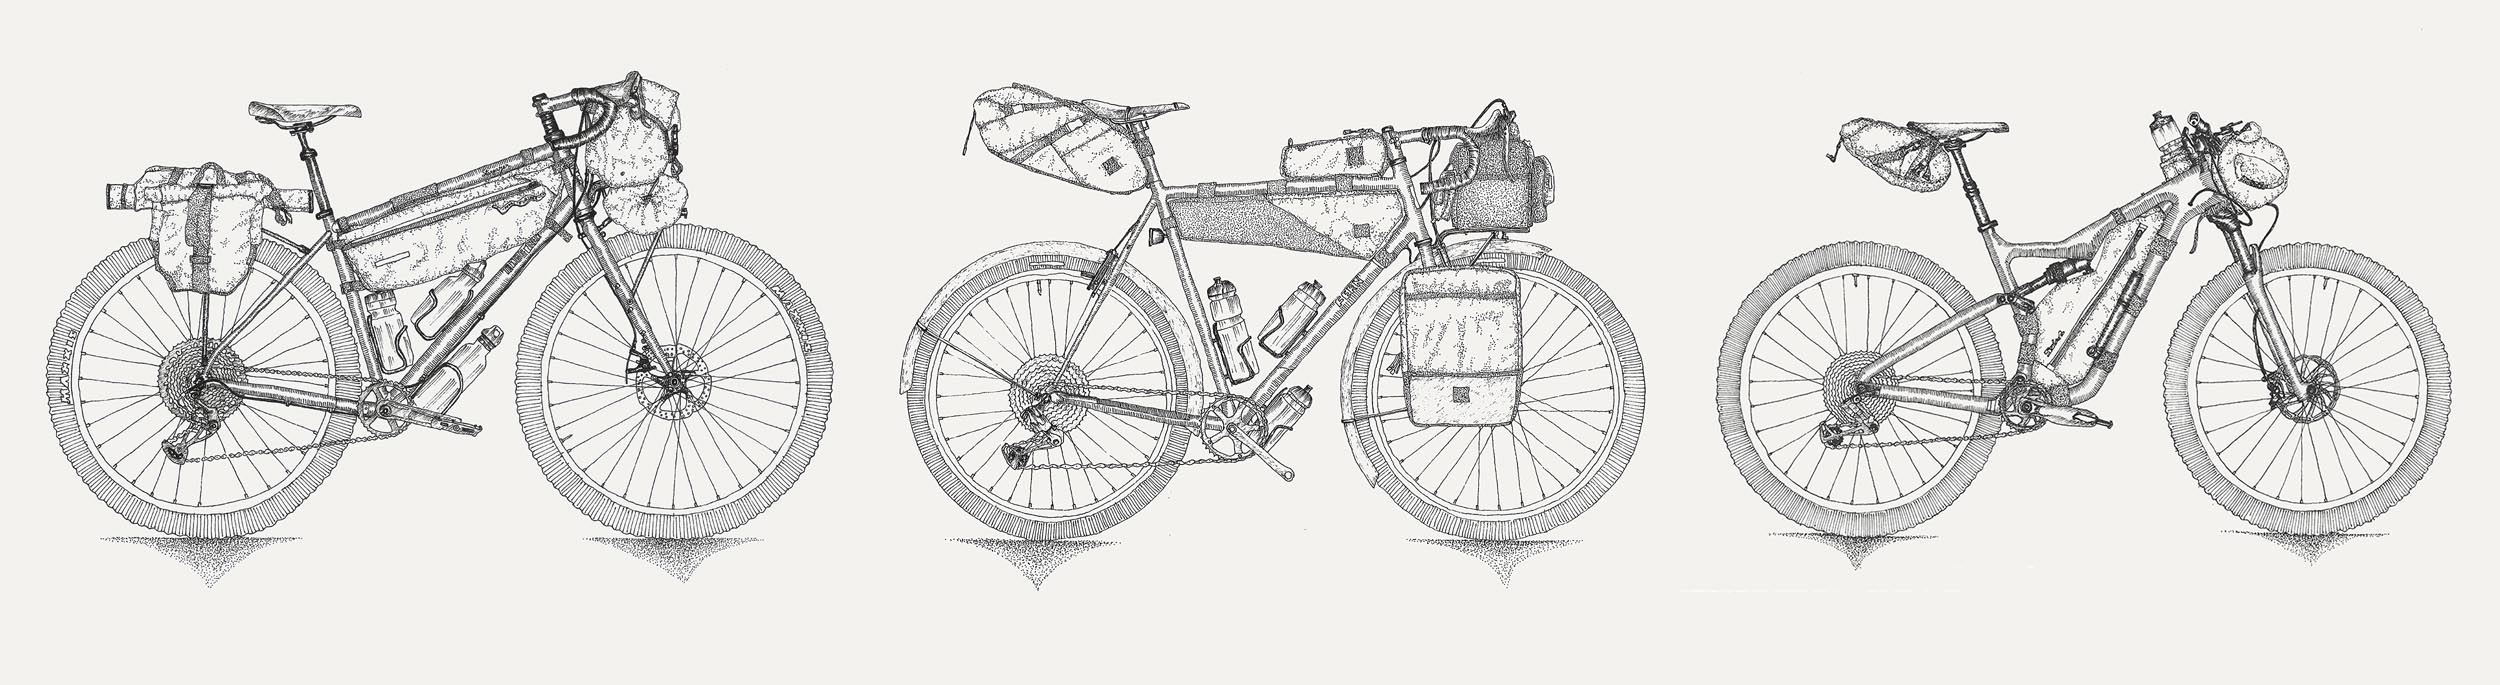 Bikepacking illustration